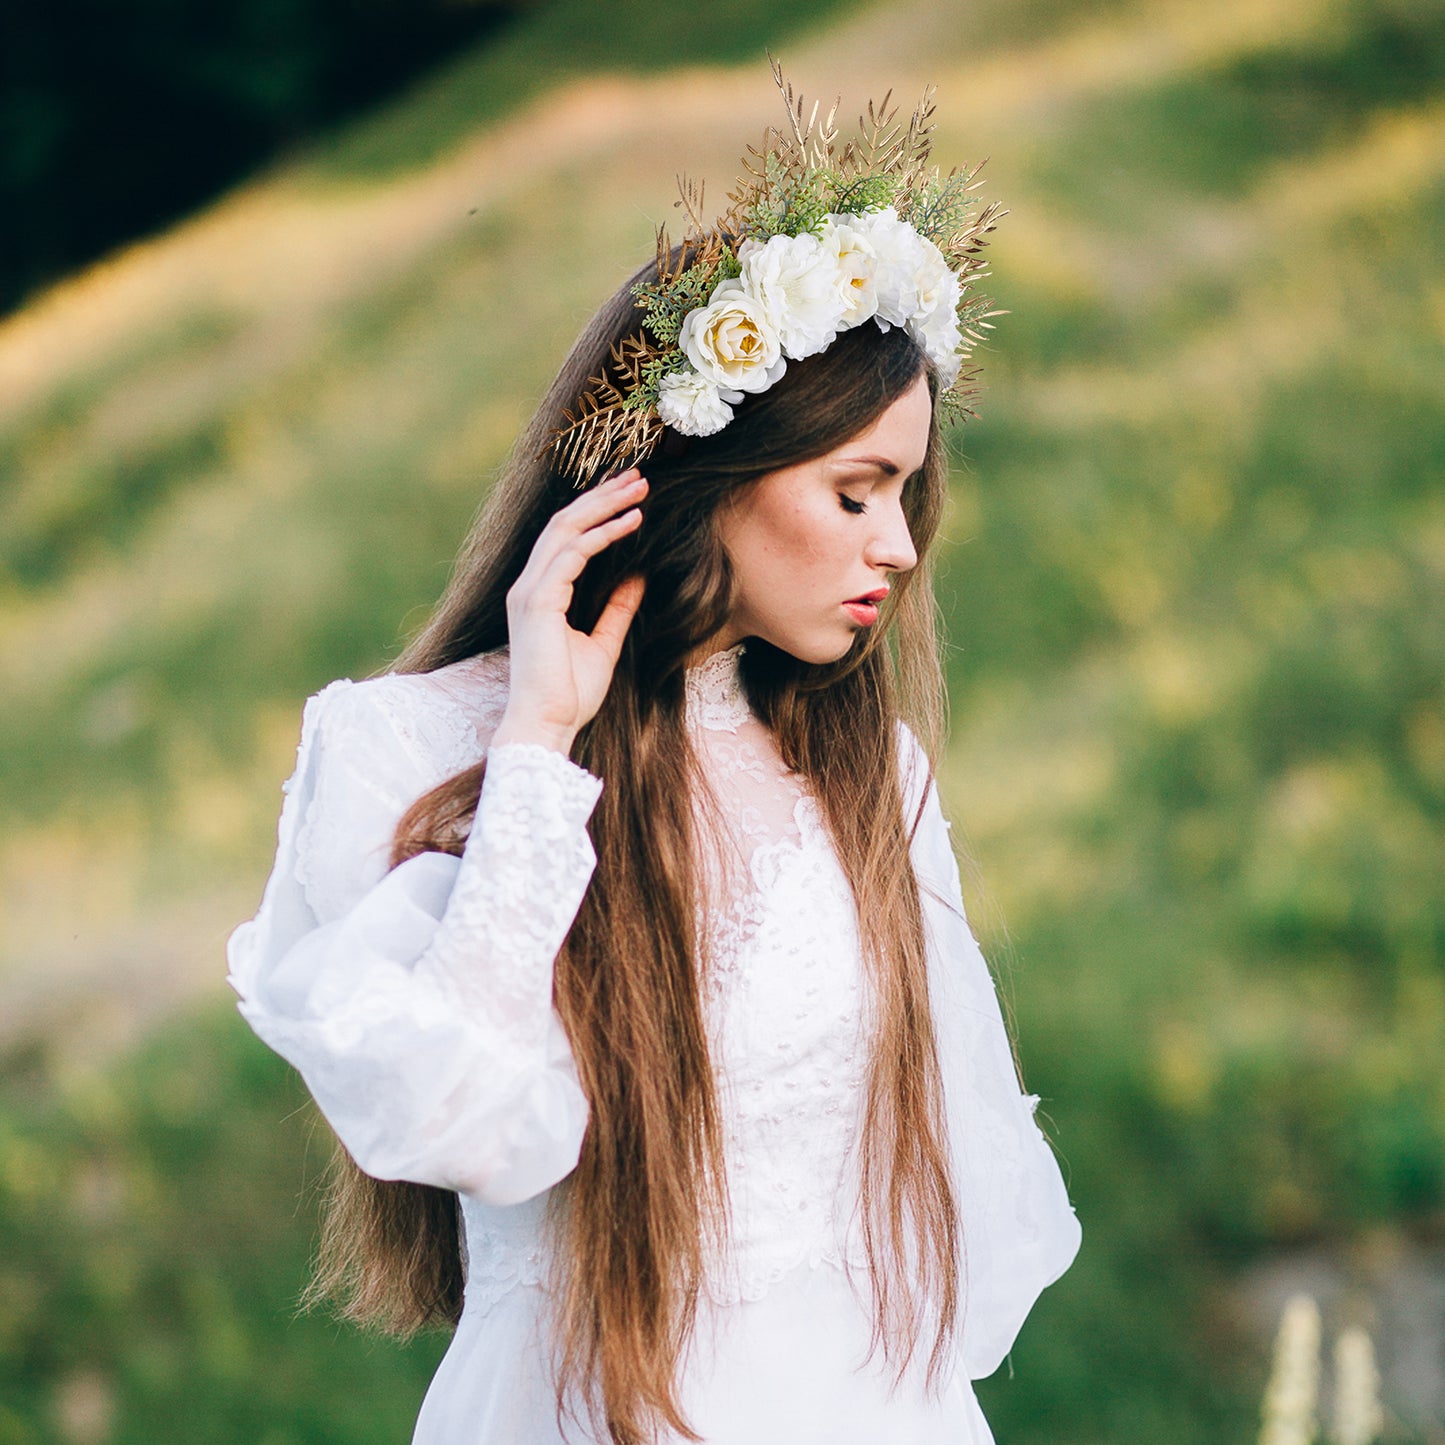 Floral Woodland Wedding Crown Headpiece